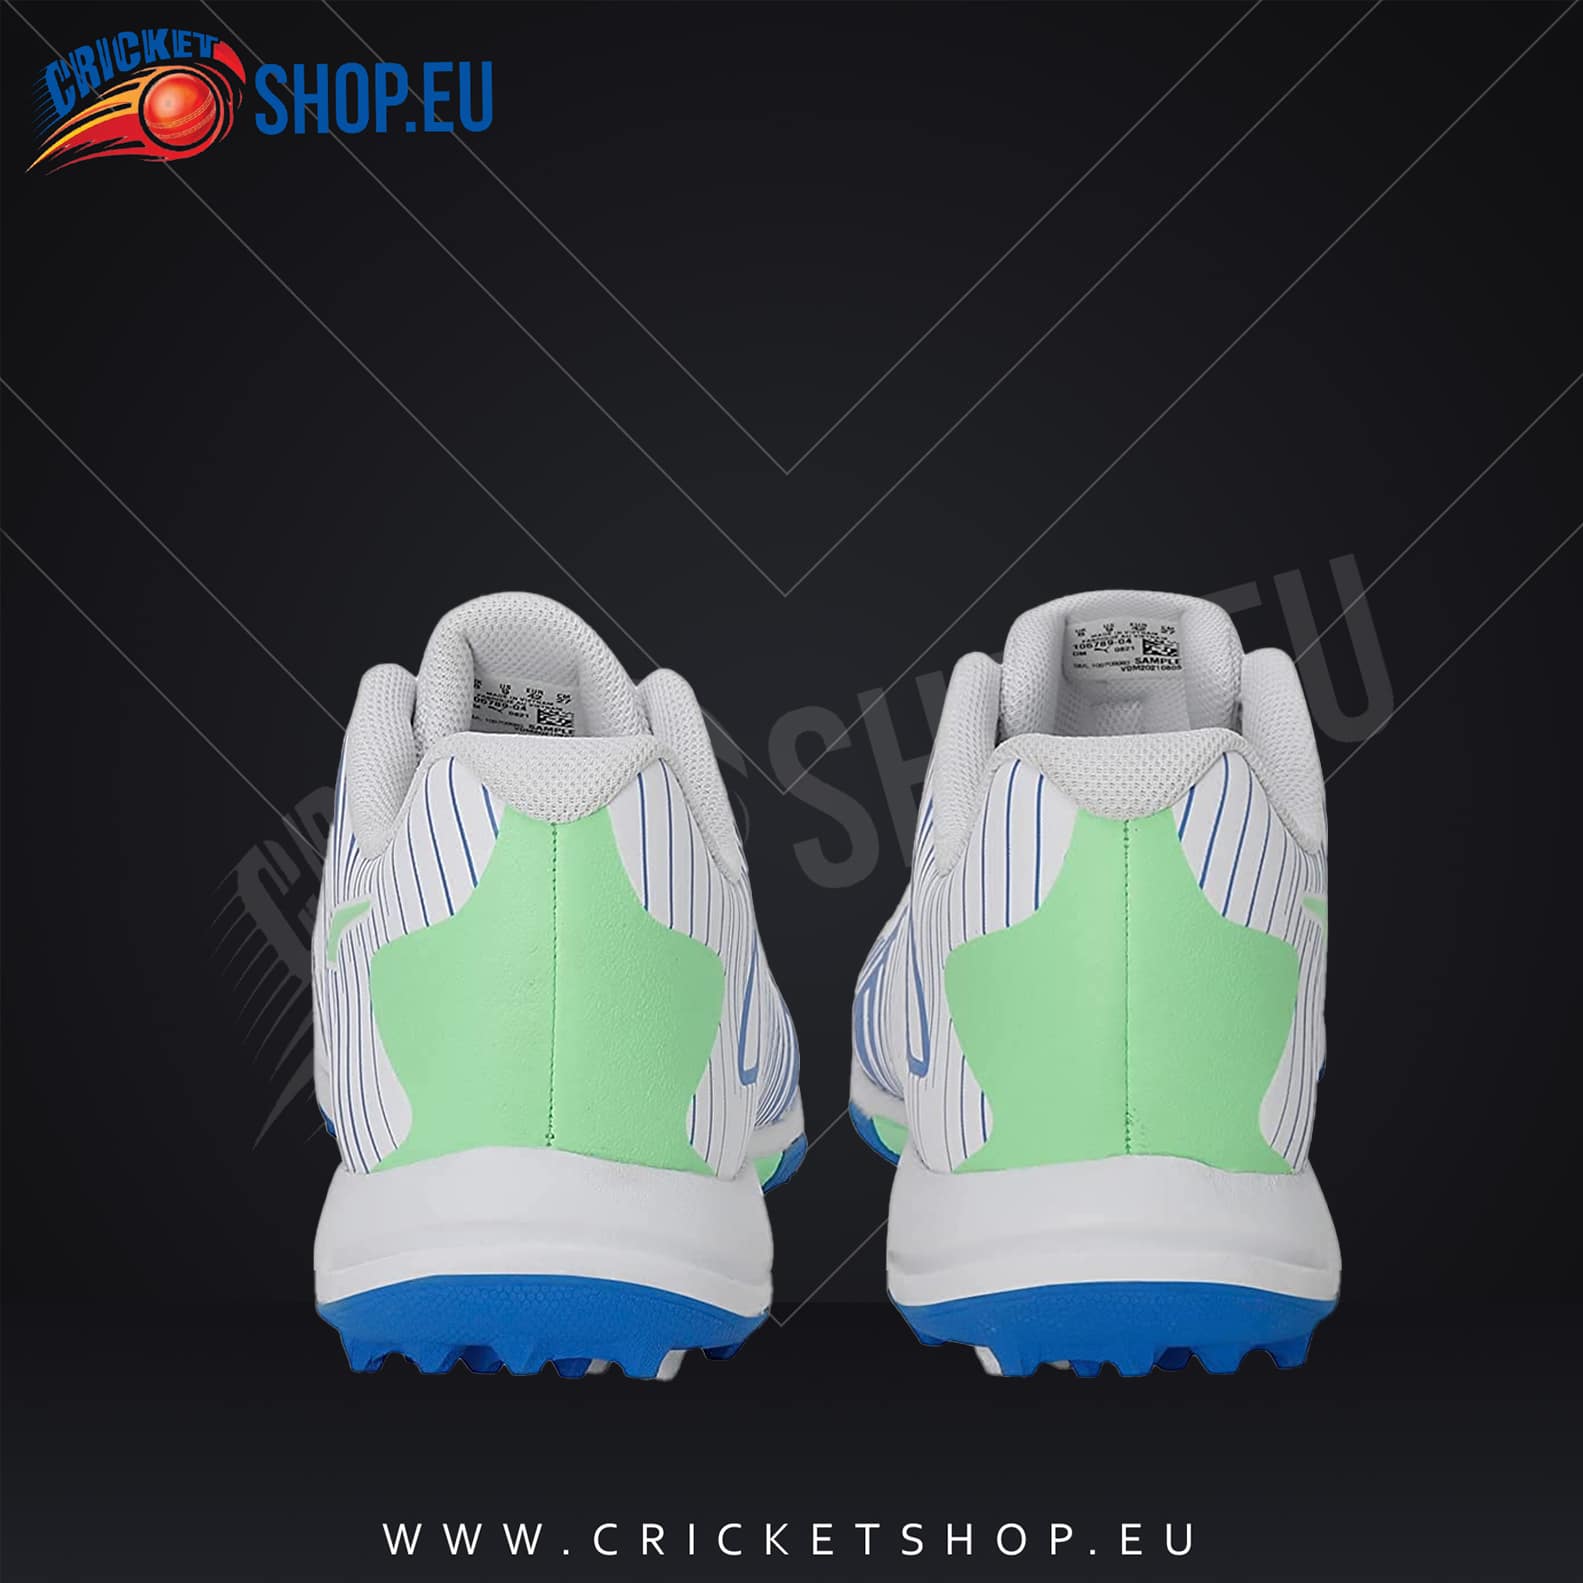 Puma 22 FH Rubber Cricket Shoes White-Bluemazing-Neon